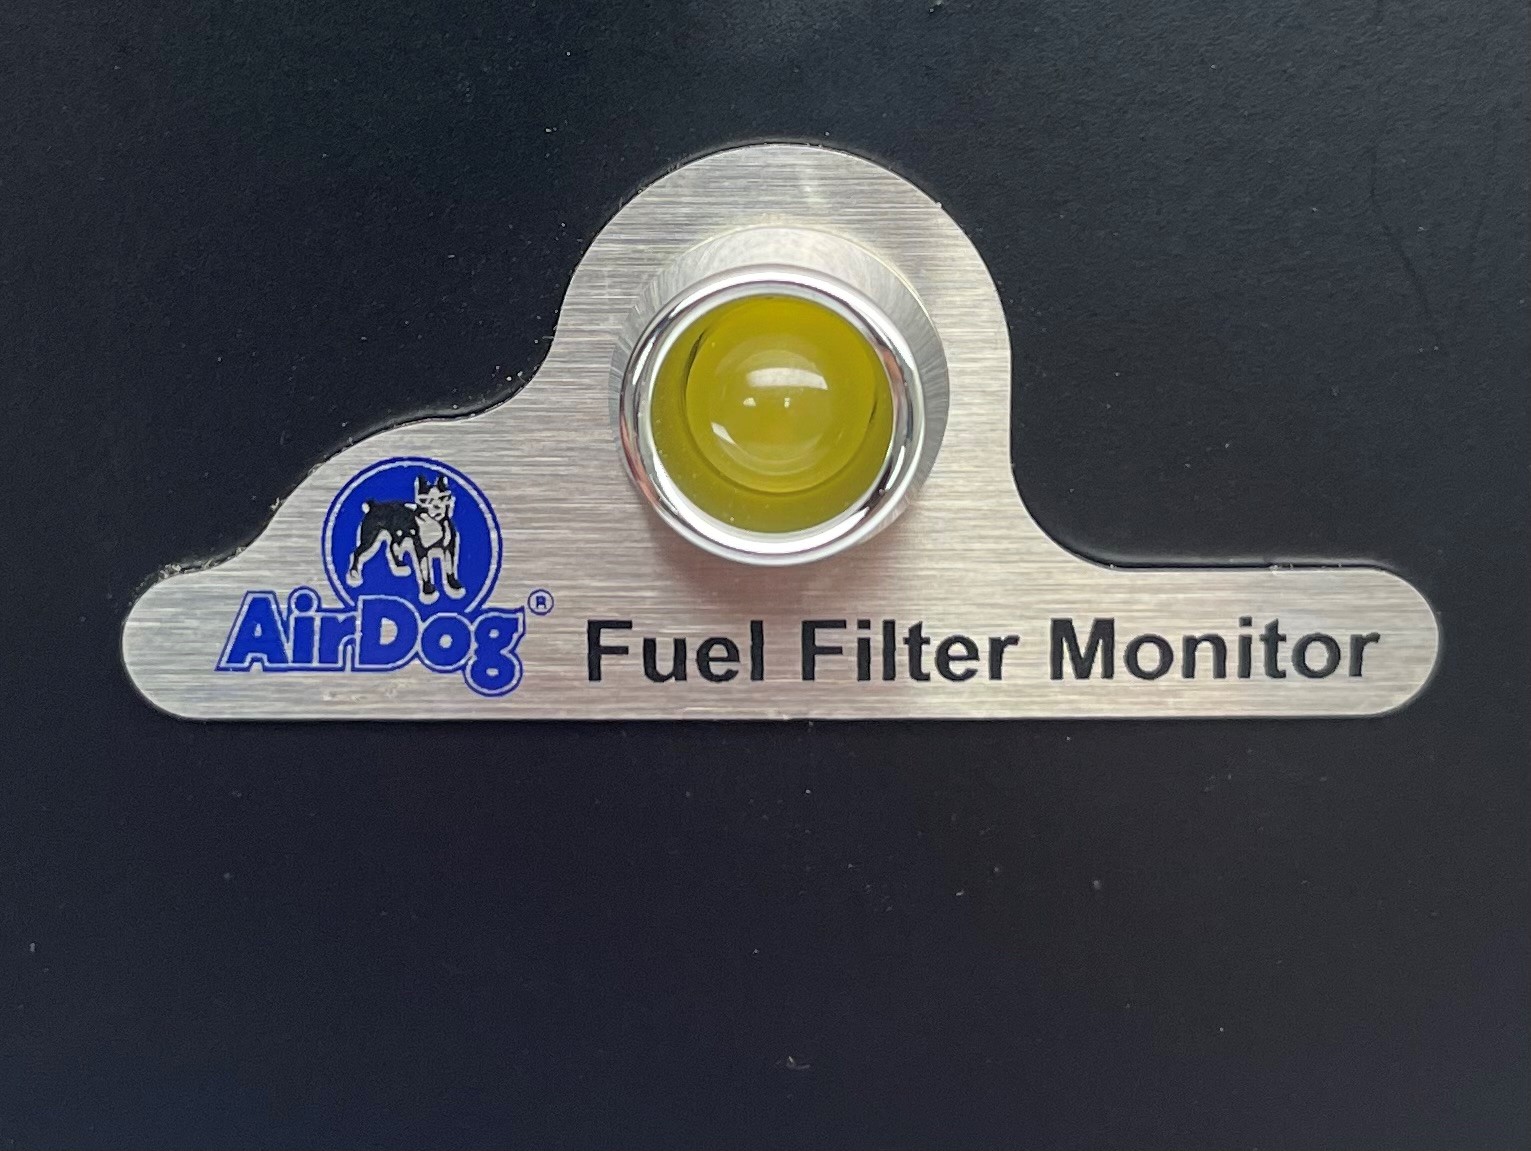 airdog fuel filter indicator light & dash plate